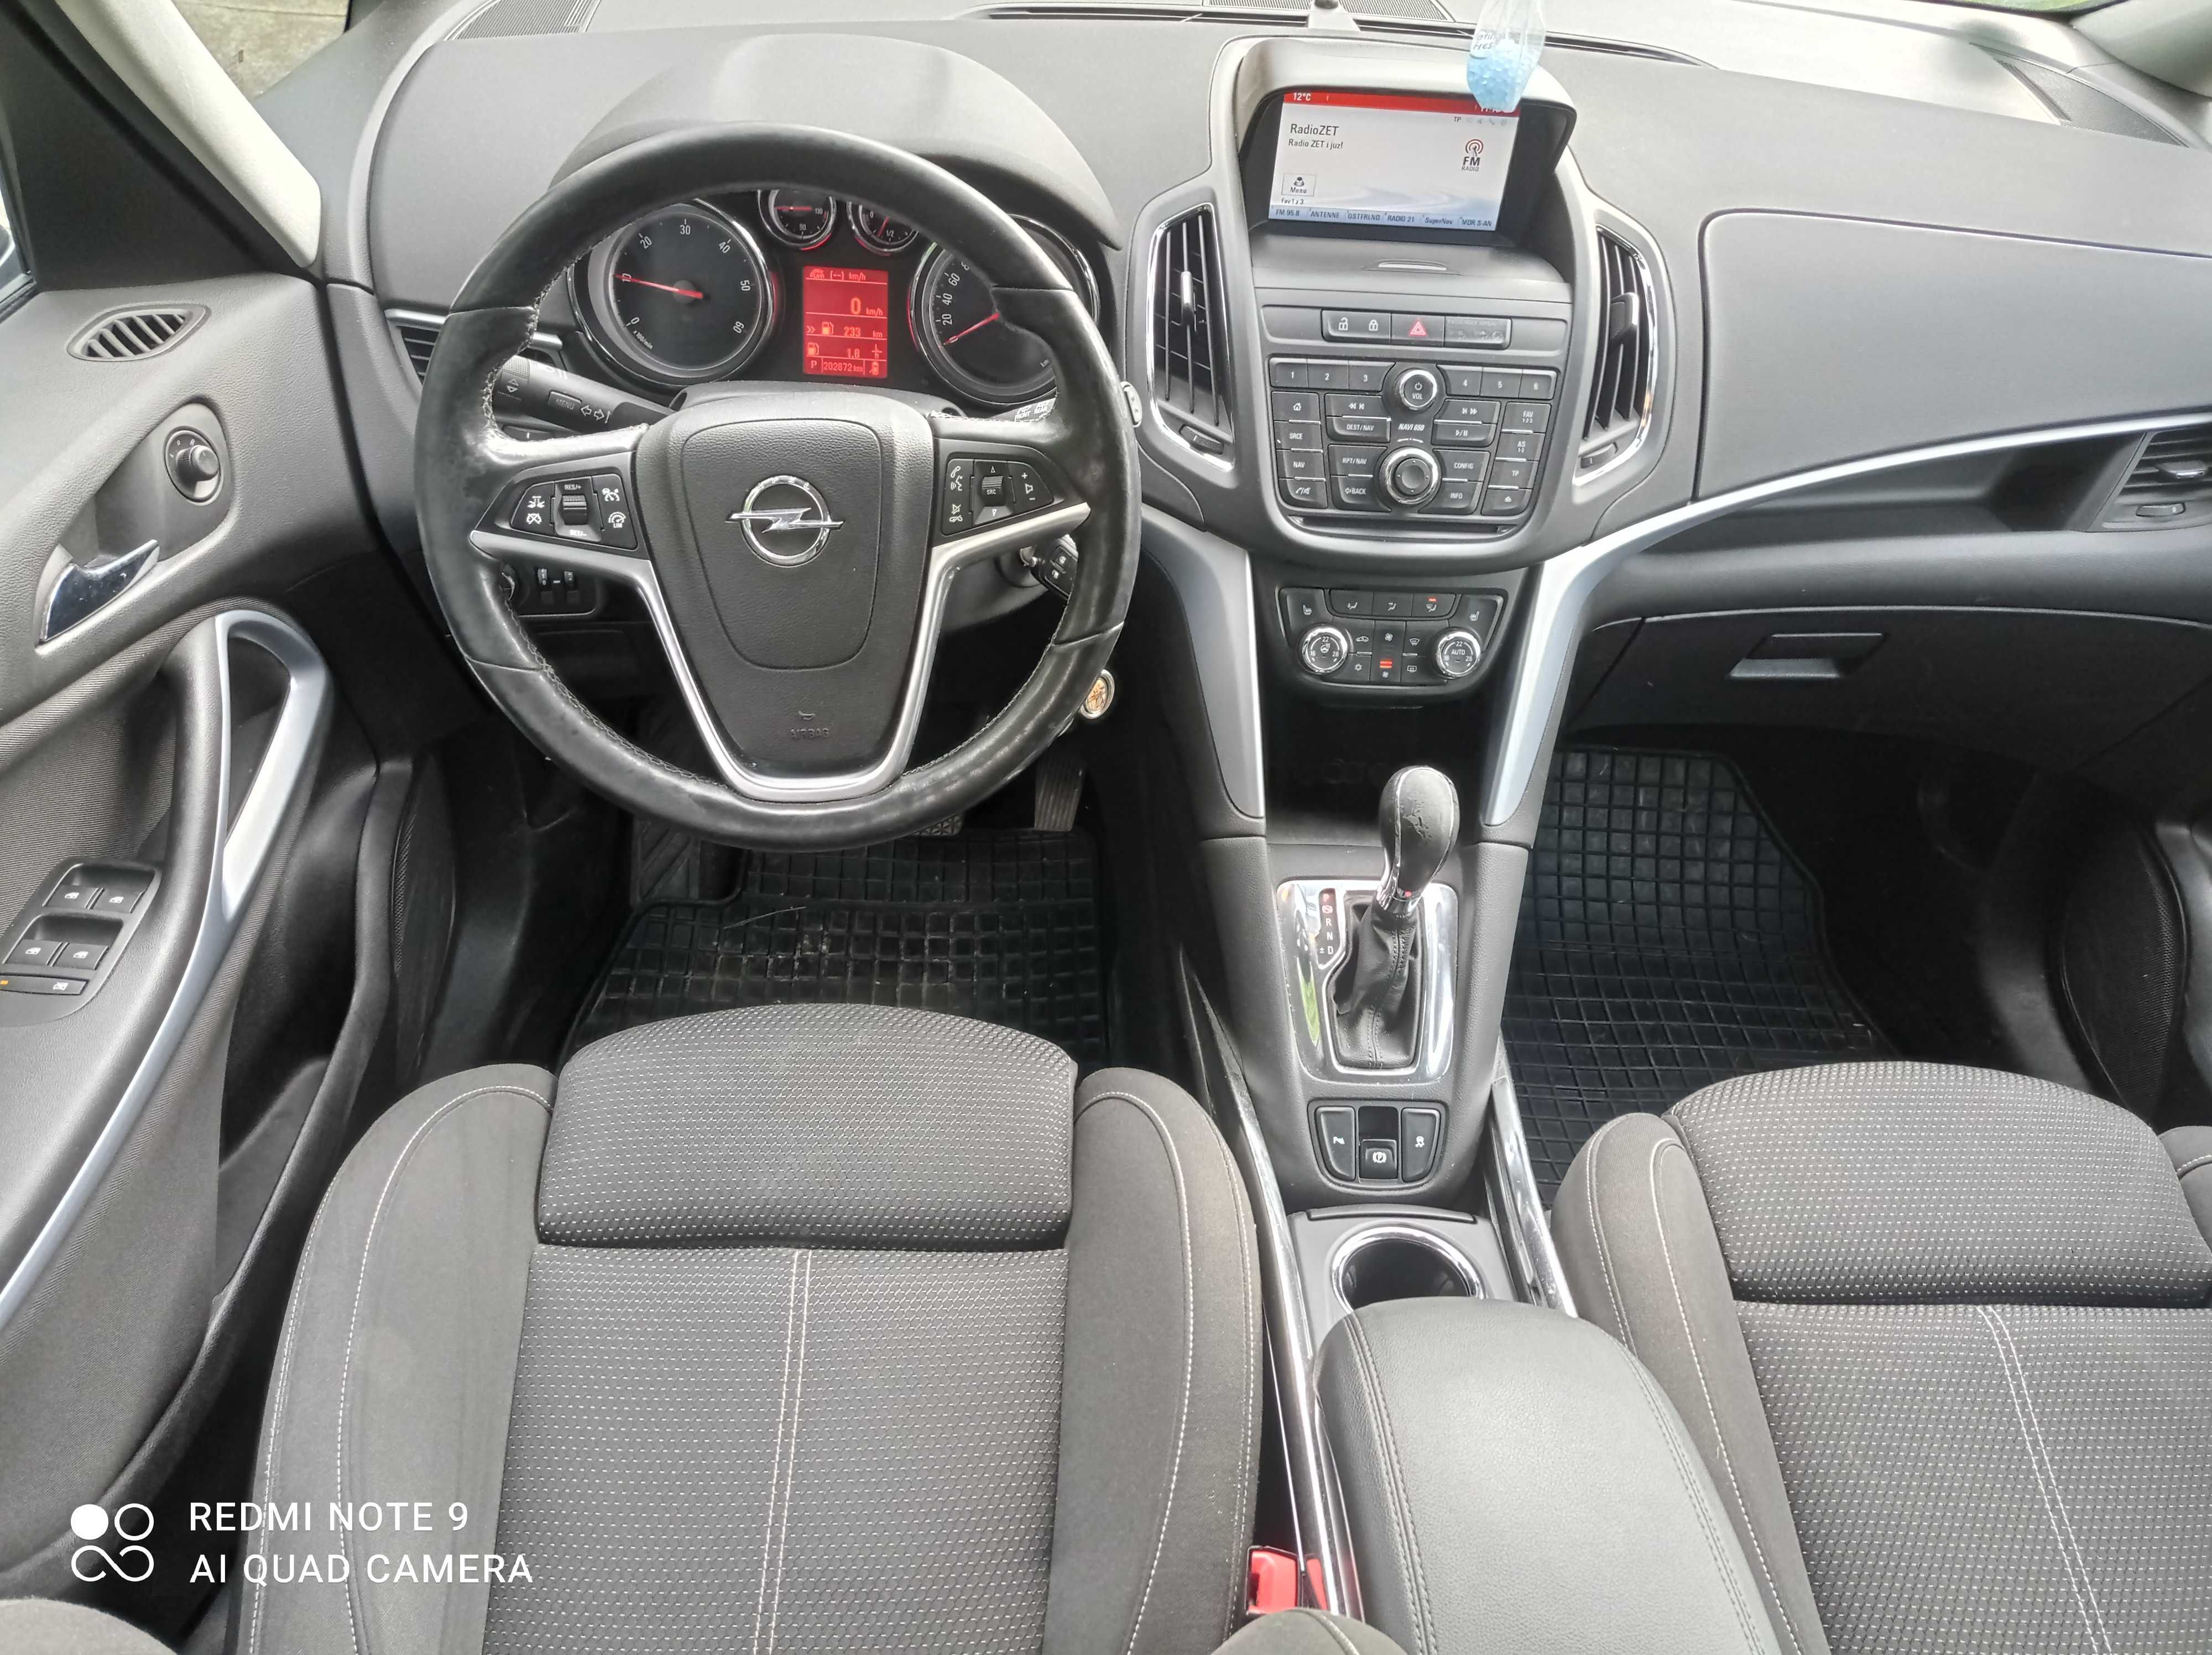 Opel Zafira Tourer 2.0 CDTI 2015r 170KM